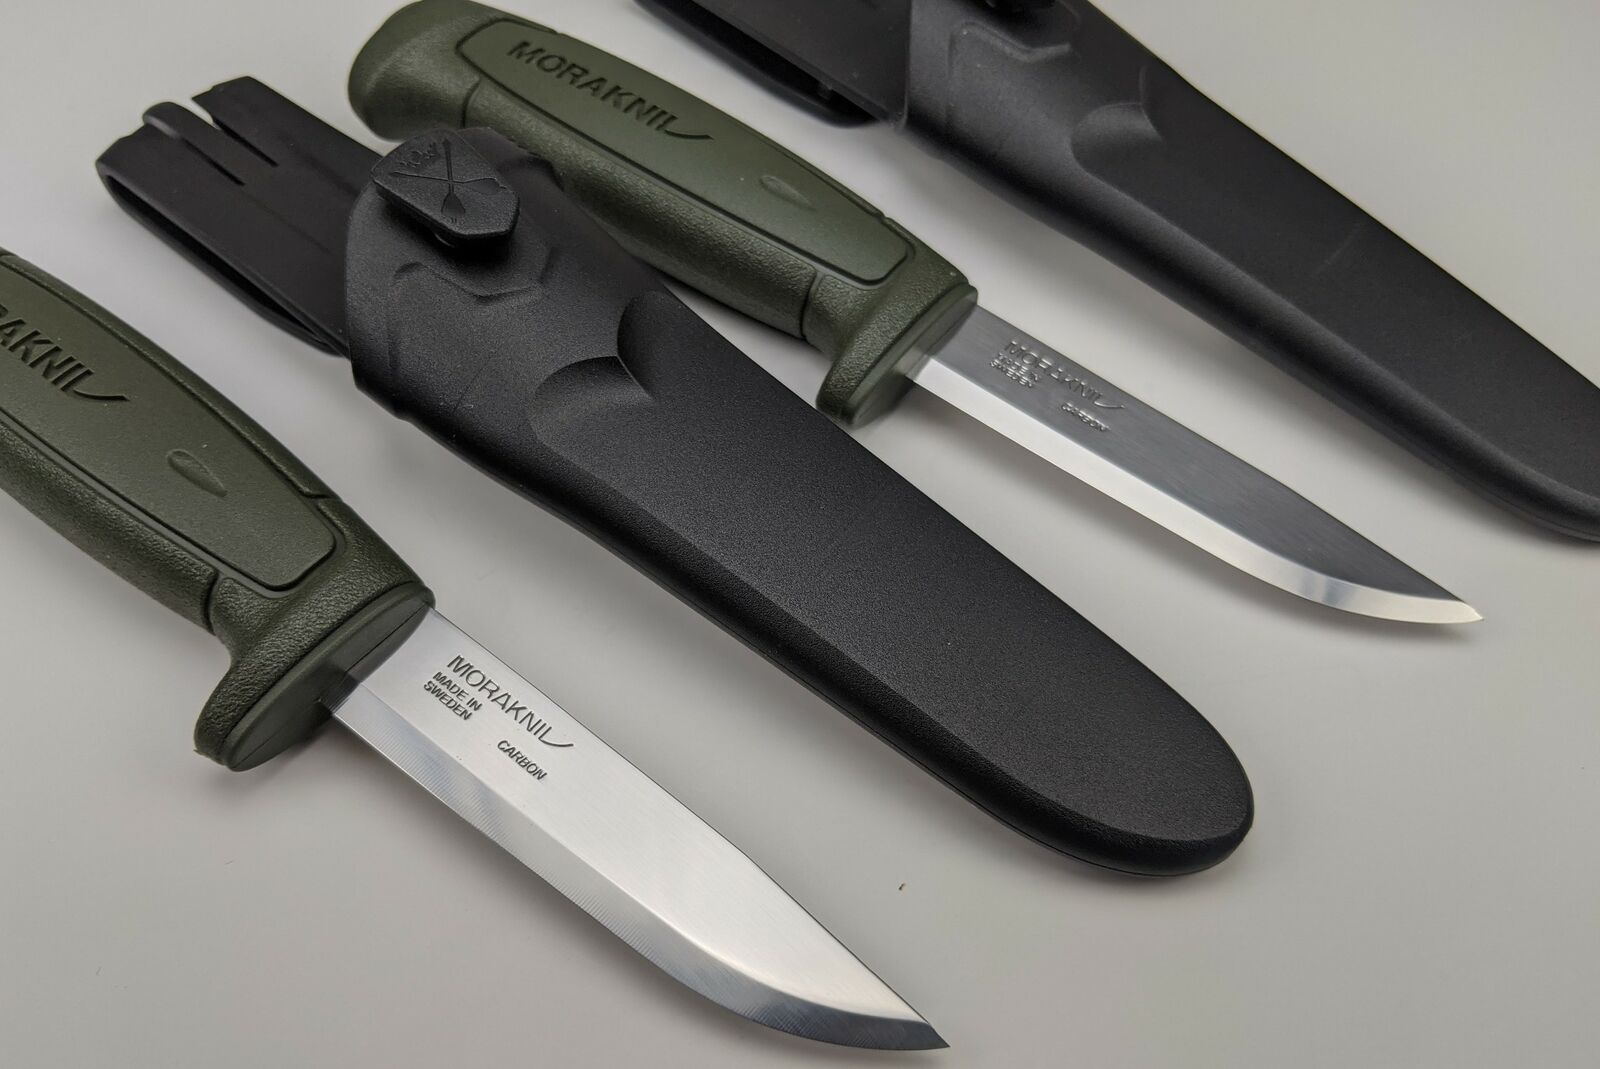 2 Pack Lot - Morakniv Basic 511 Knife & Sheath - 2 Green Mora Knives & Sheaths Morakniv